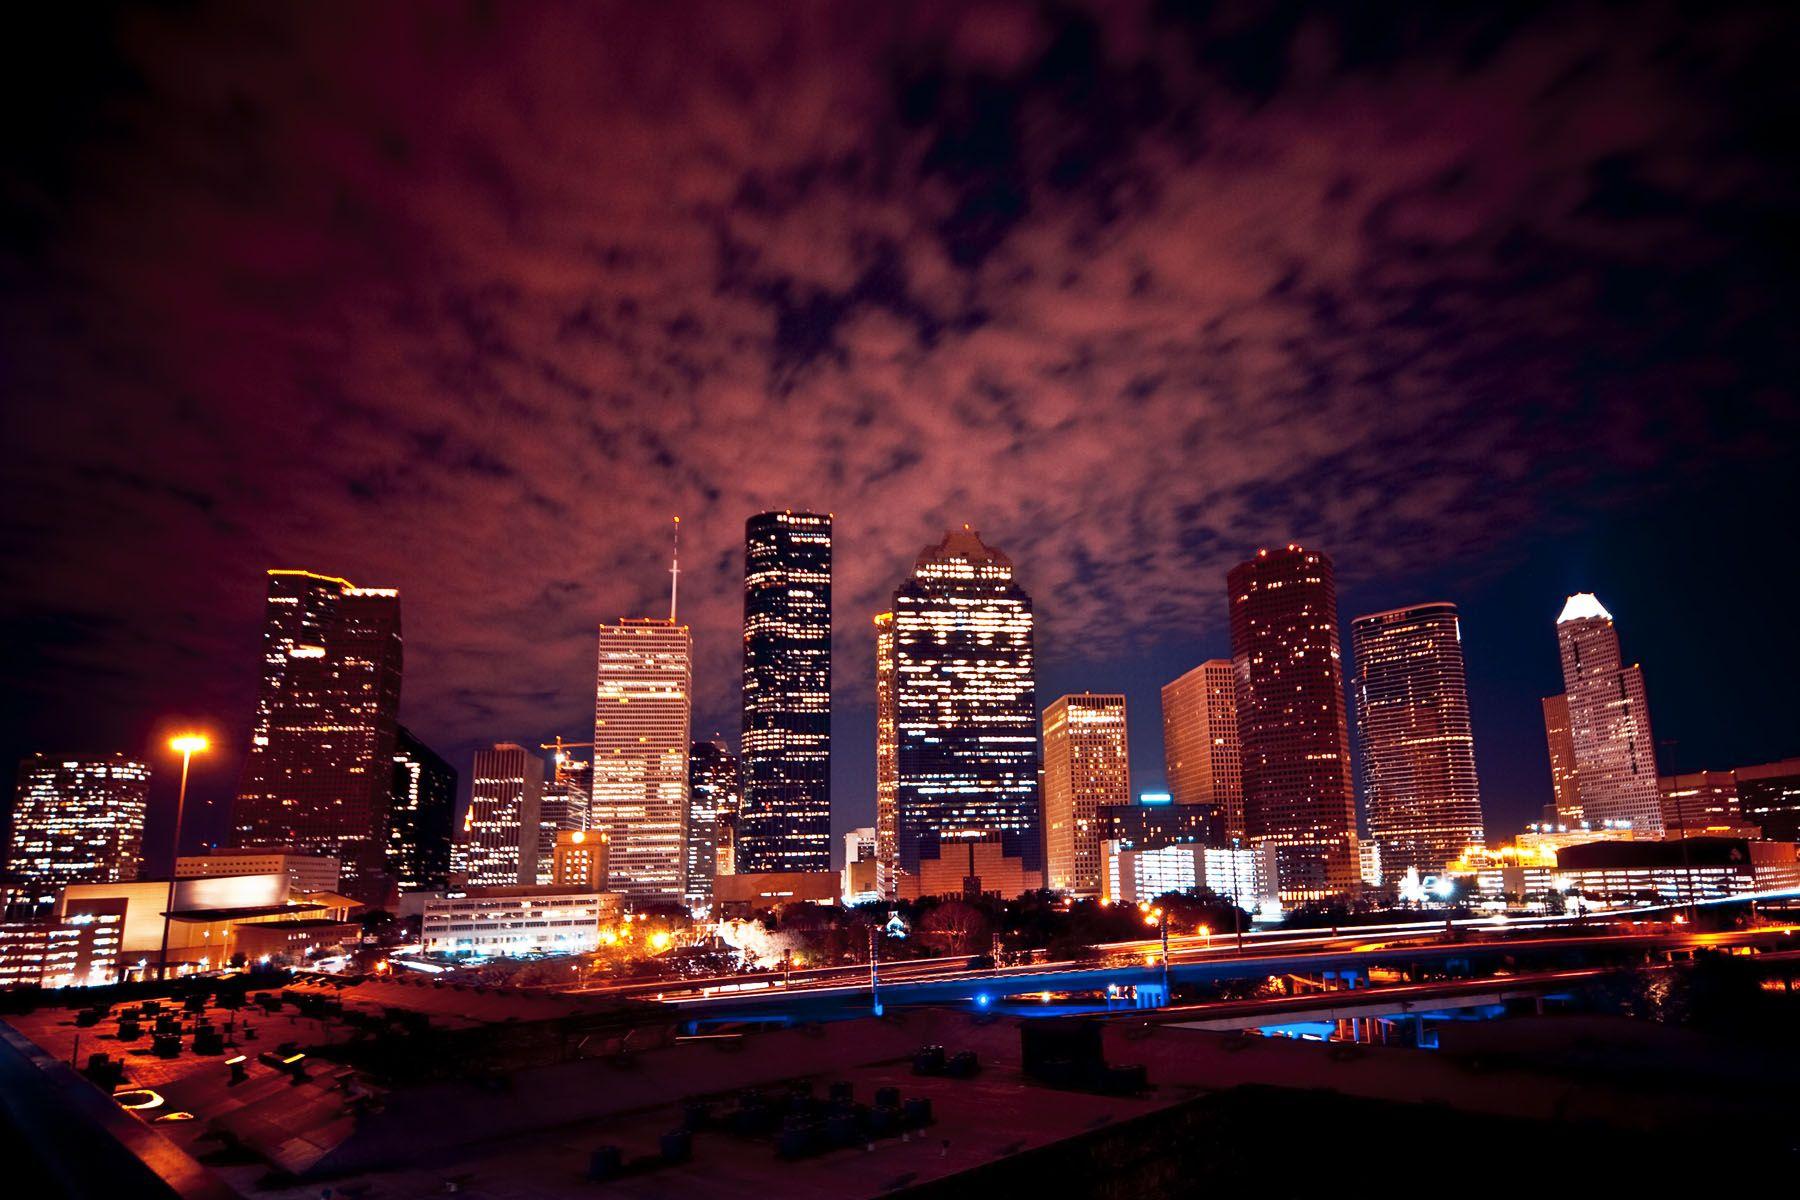 Wallpaper.wiki Night Houston Skyline Wallpaper PIC WPD002281